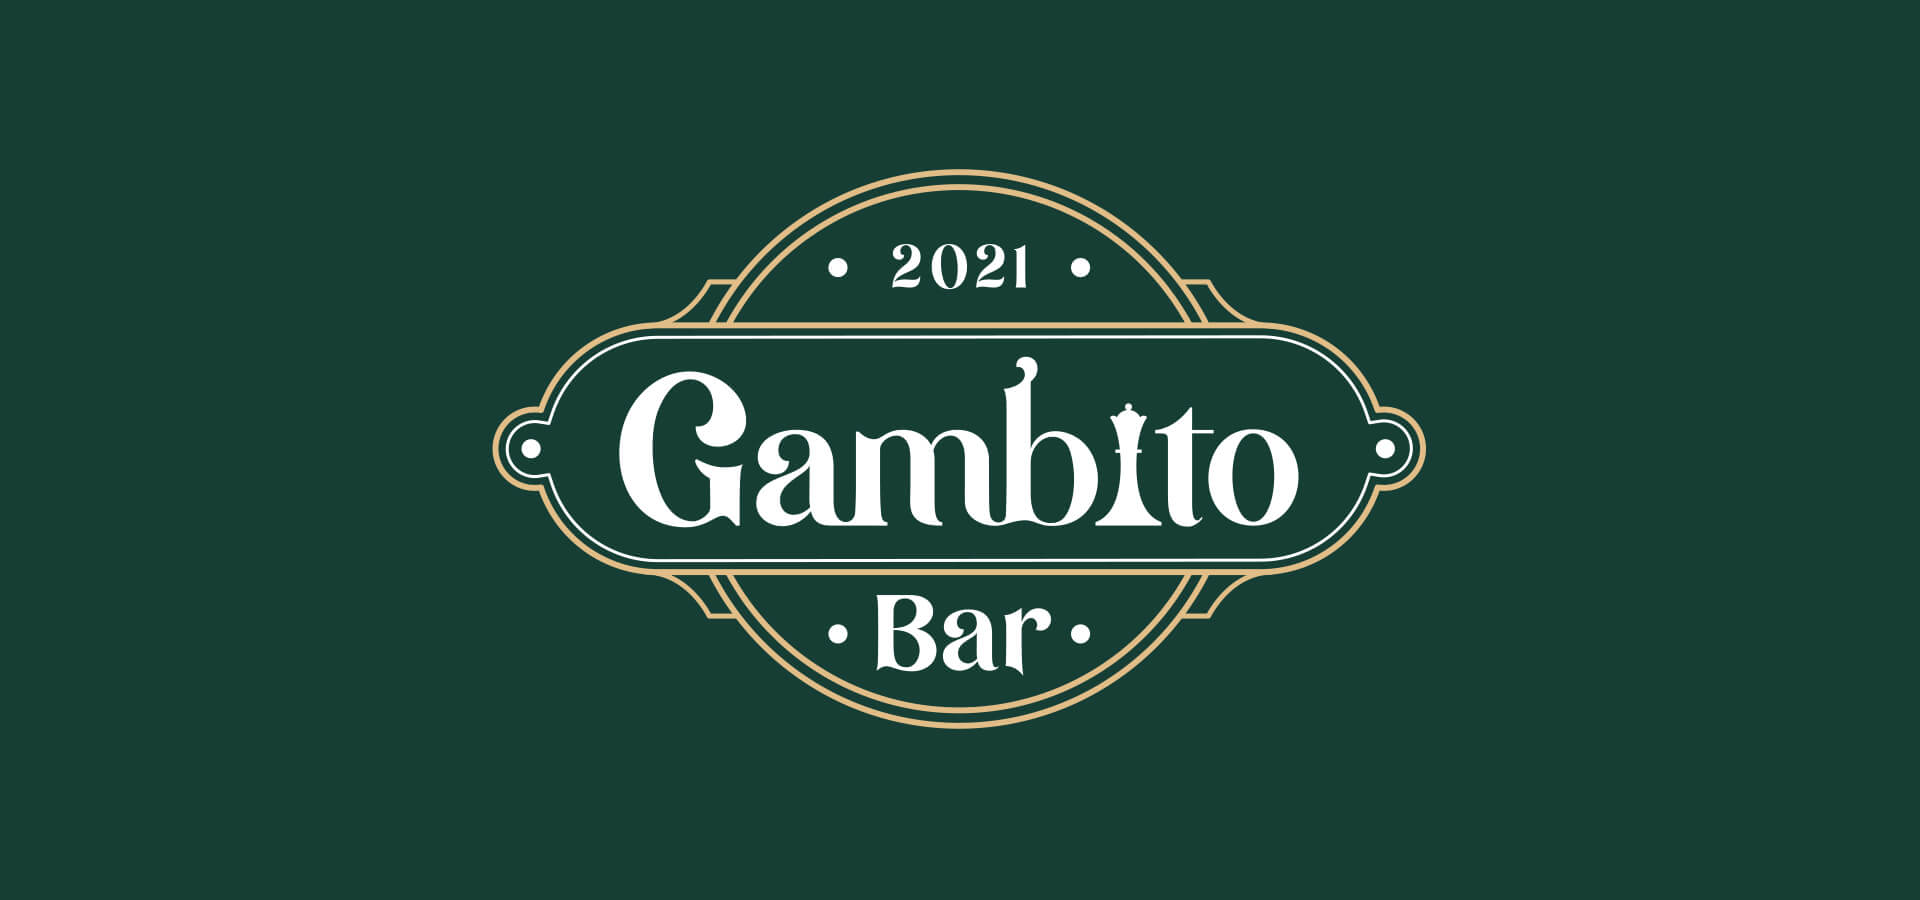 Gambito – Grunge Design